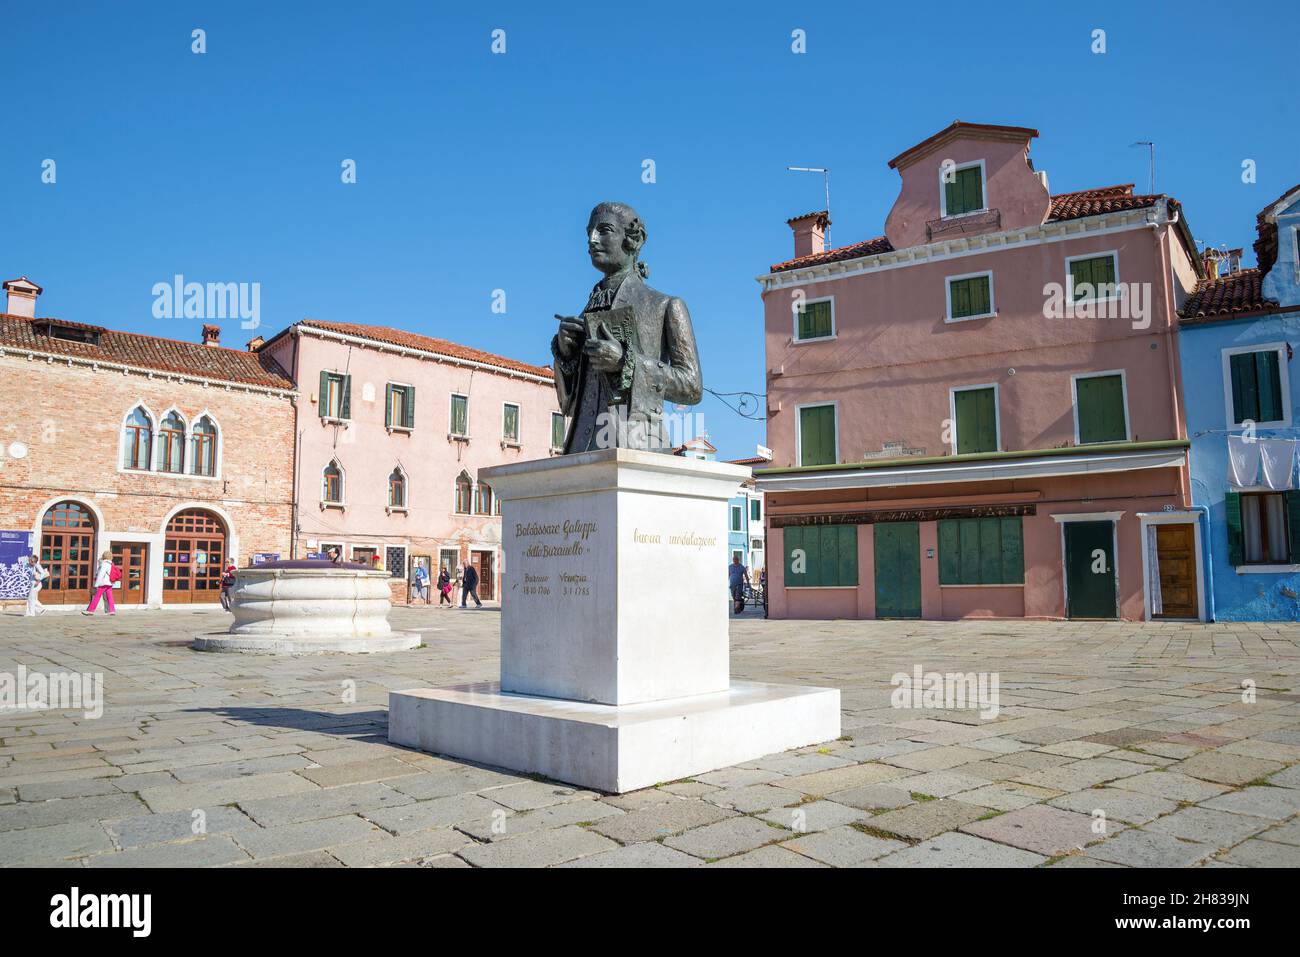 VENEDIG, ITALIEN - 26. SEPTEMBER 2017: Denkmal des italienischen Komponisten Baldassare Galuppi (Buranello) auf dem Stadtplatz. Burano Island Stockfoto